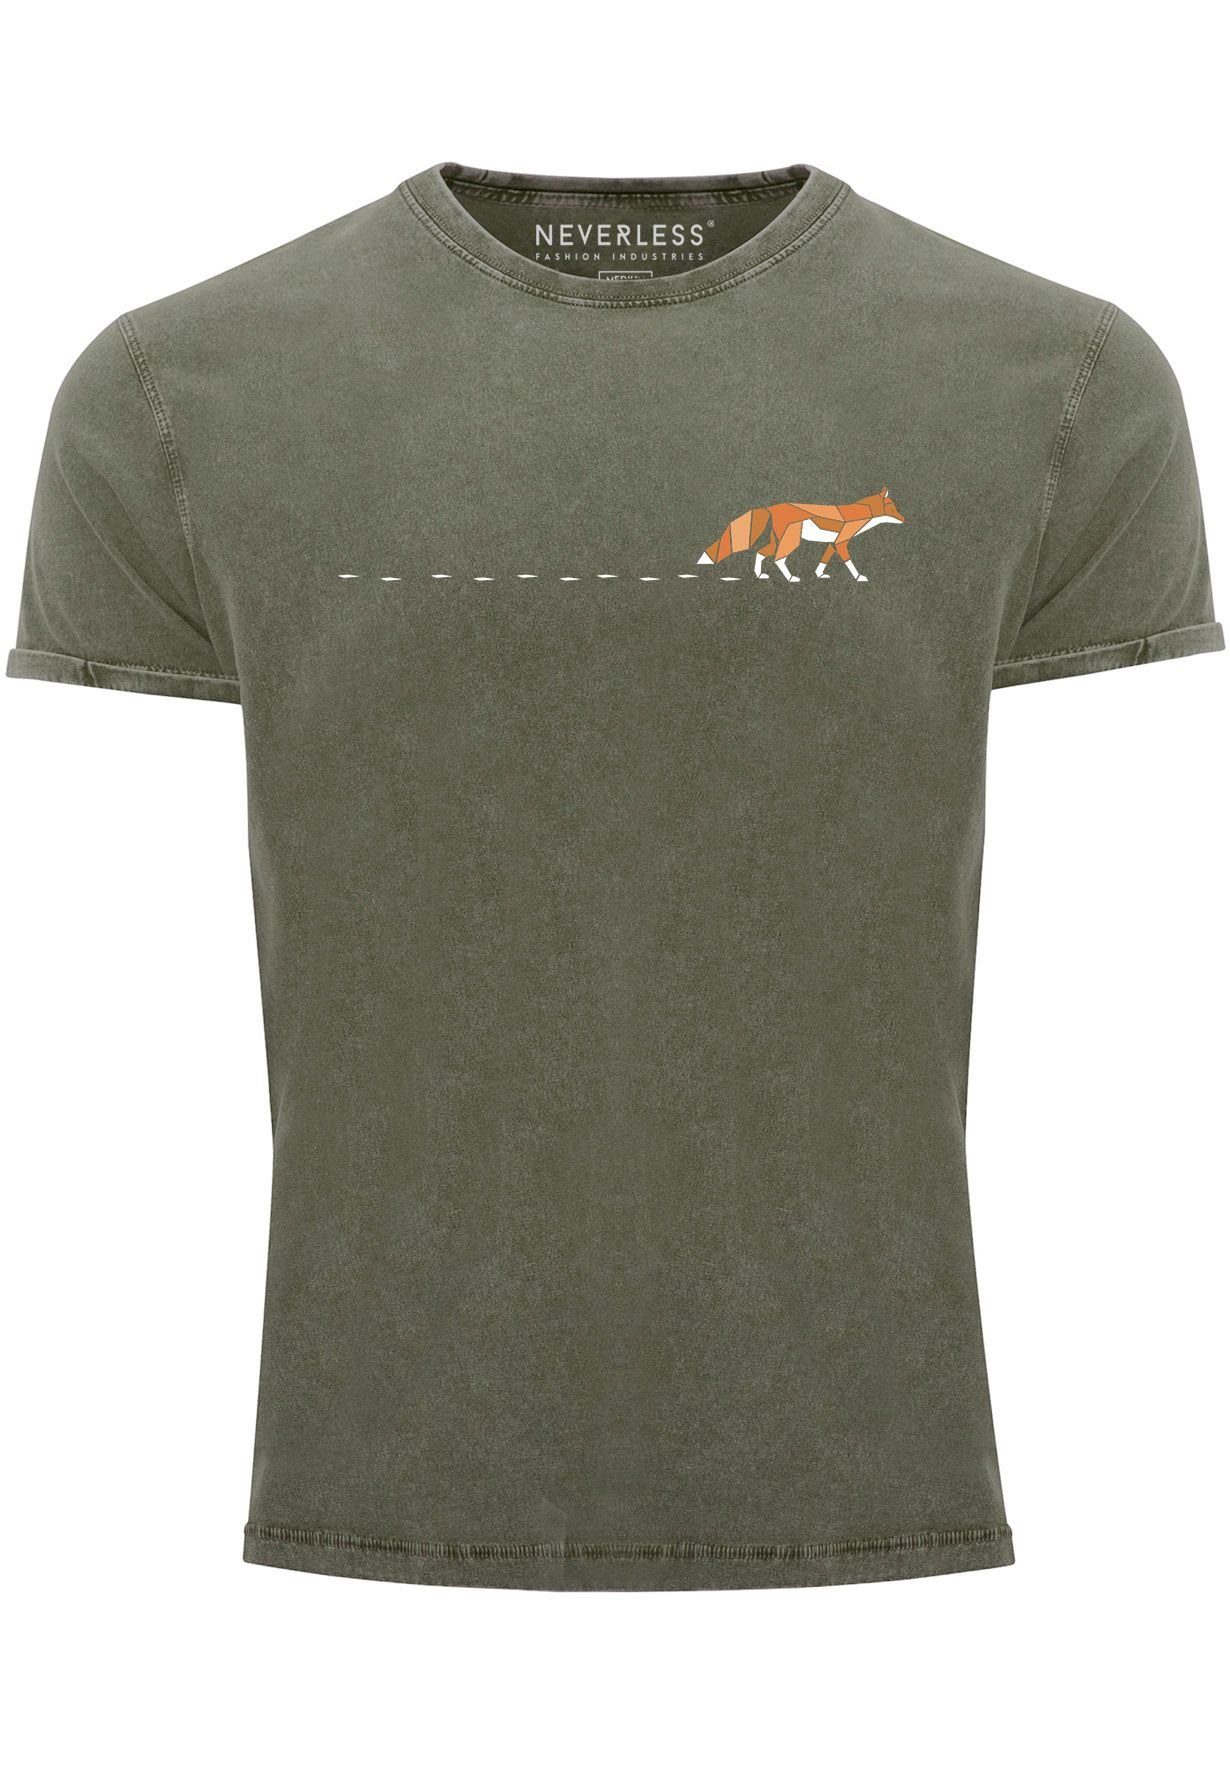 Neverless Print-Shirt Herren T-Shirt Vintage Fuchs Fox Wald Tiermotiv Logo Print Badge Fashi mit Print oliv